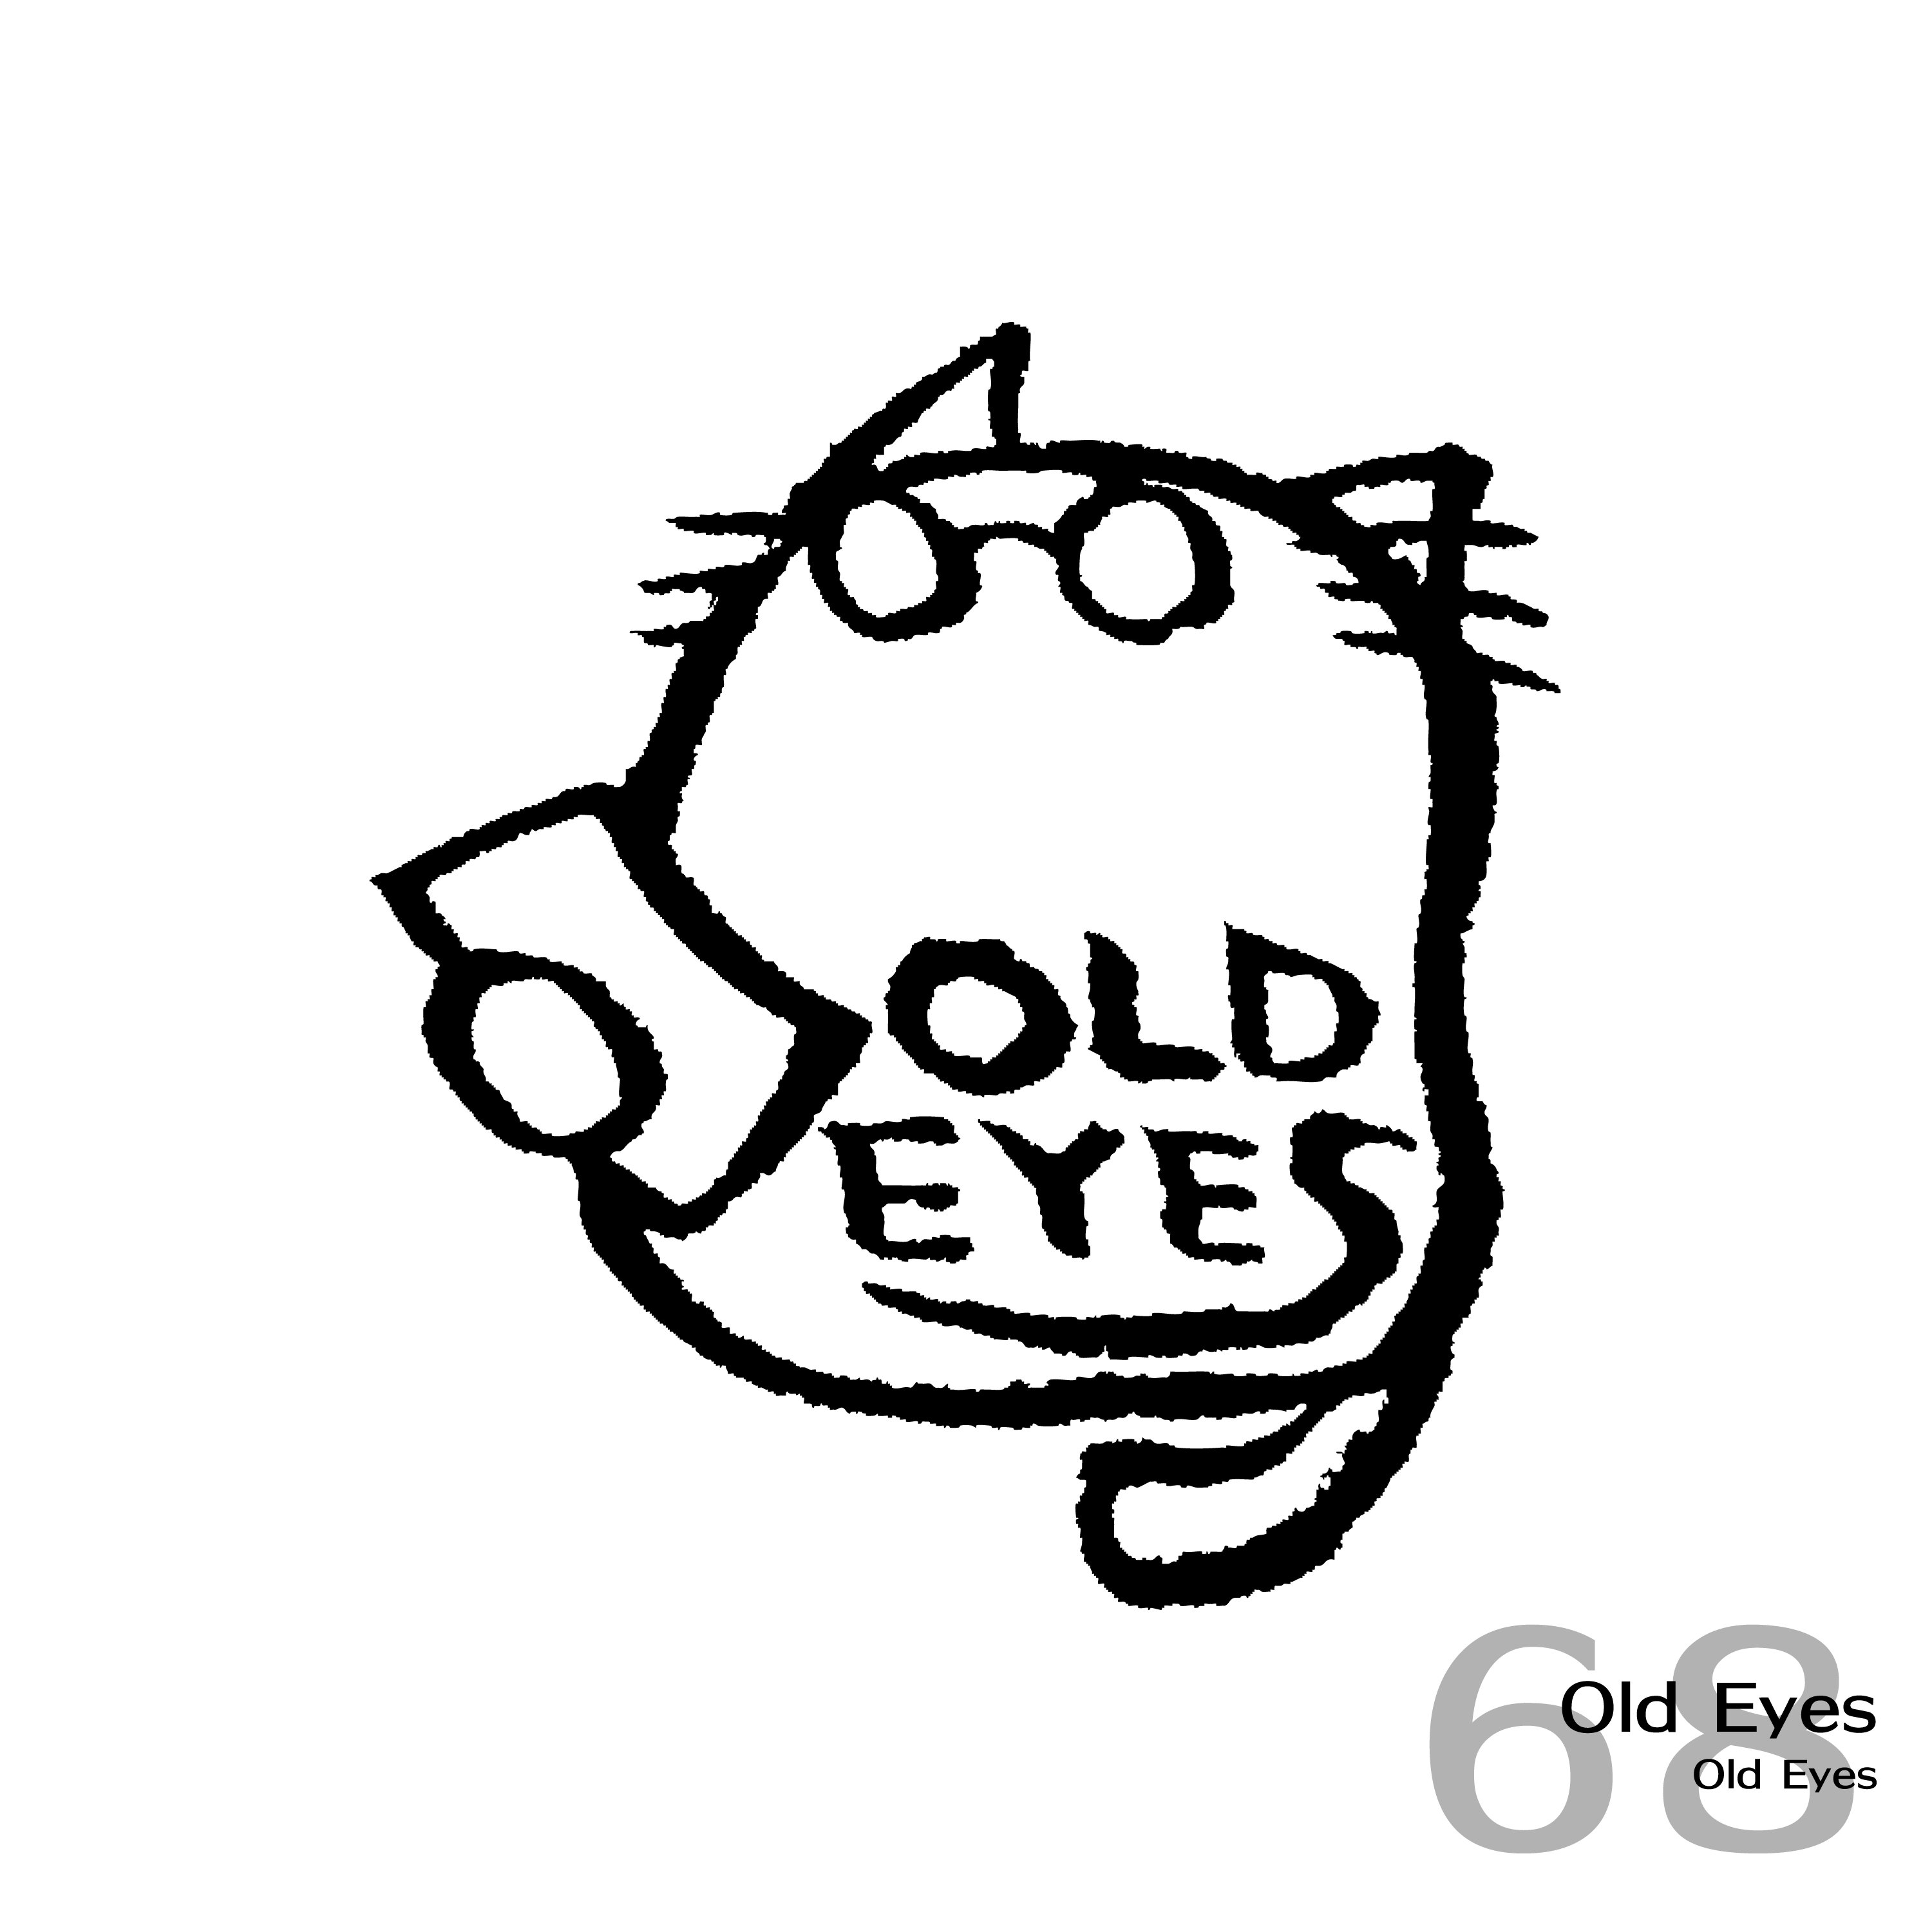 Old Eyes